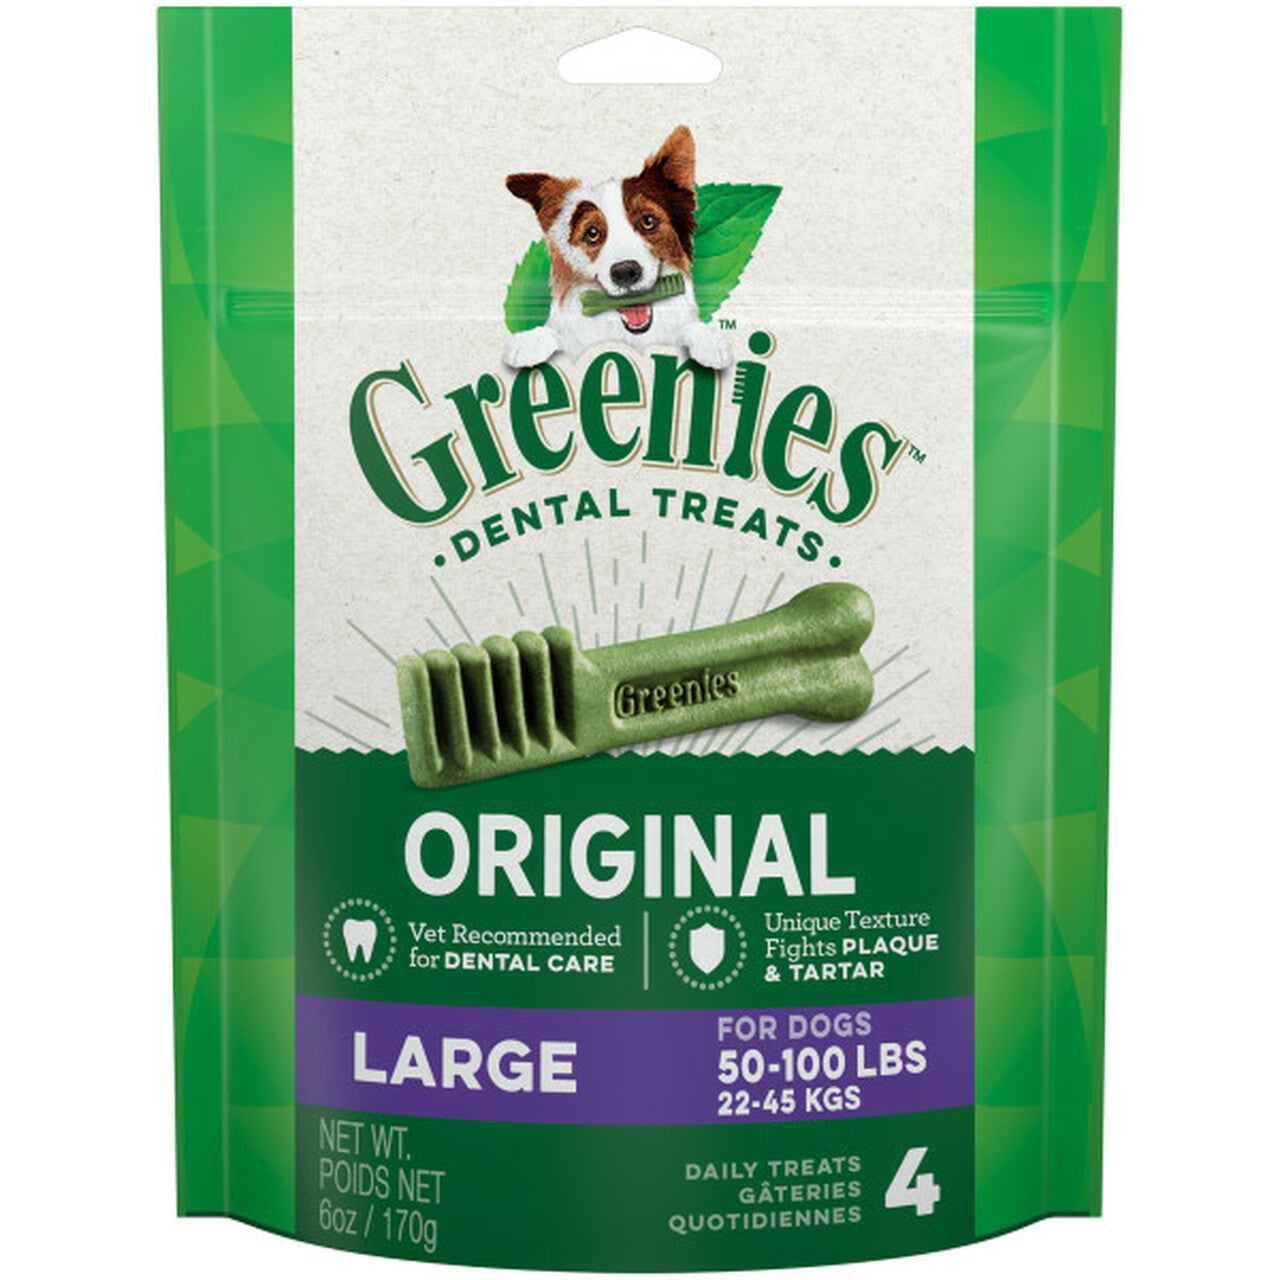 Greenies Dog